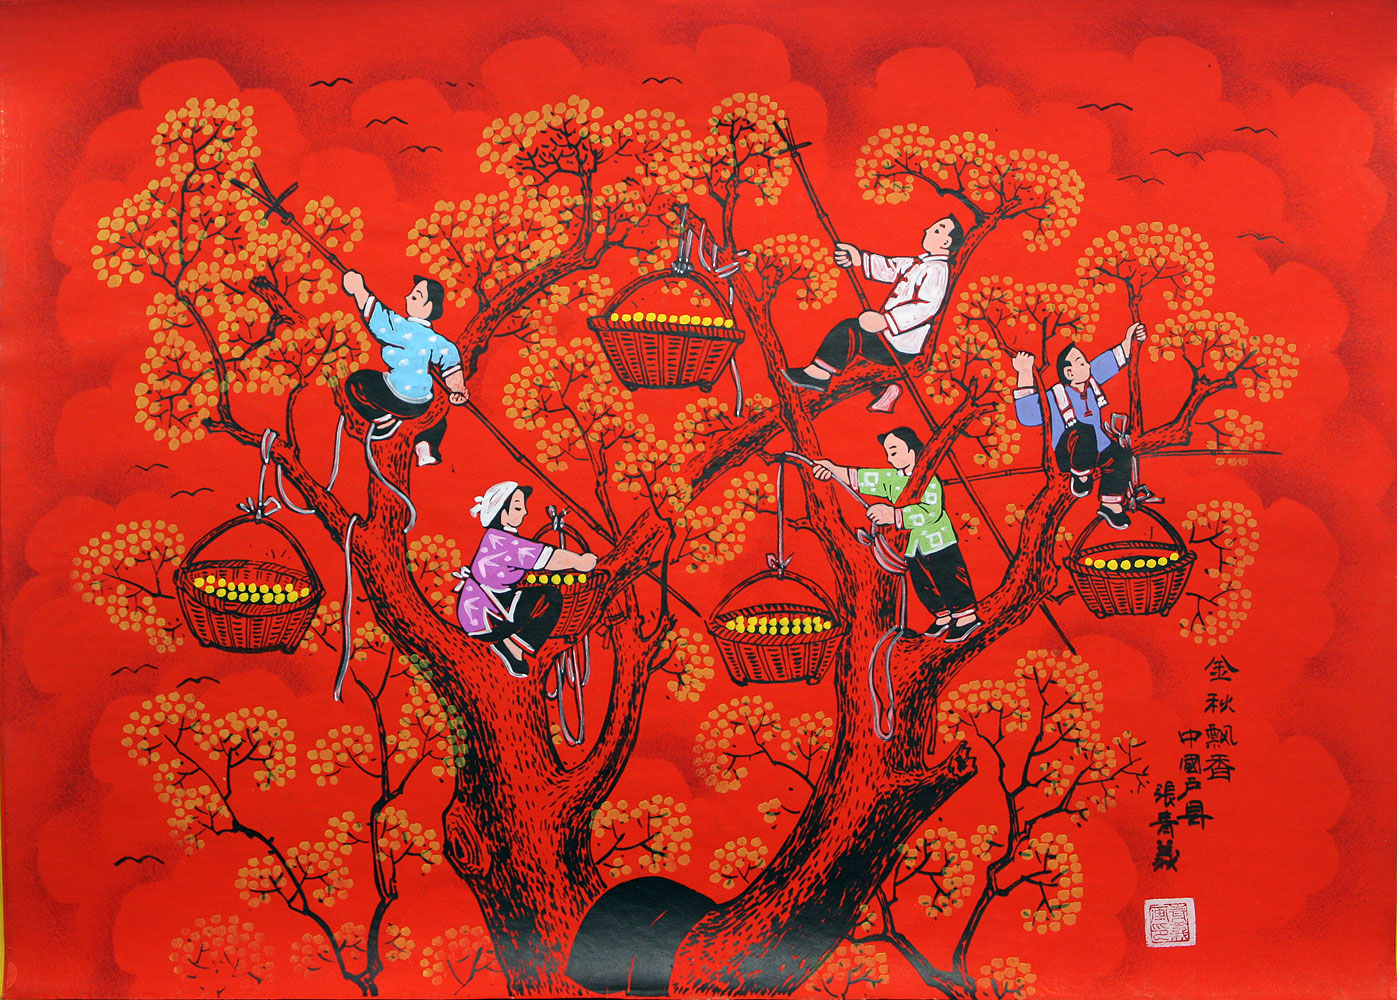 Golden Autumn Floating Fragrance - Chinese Folk Art Painting